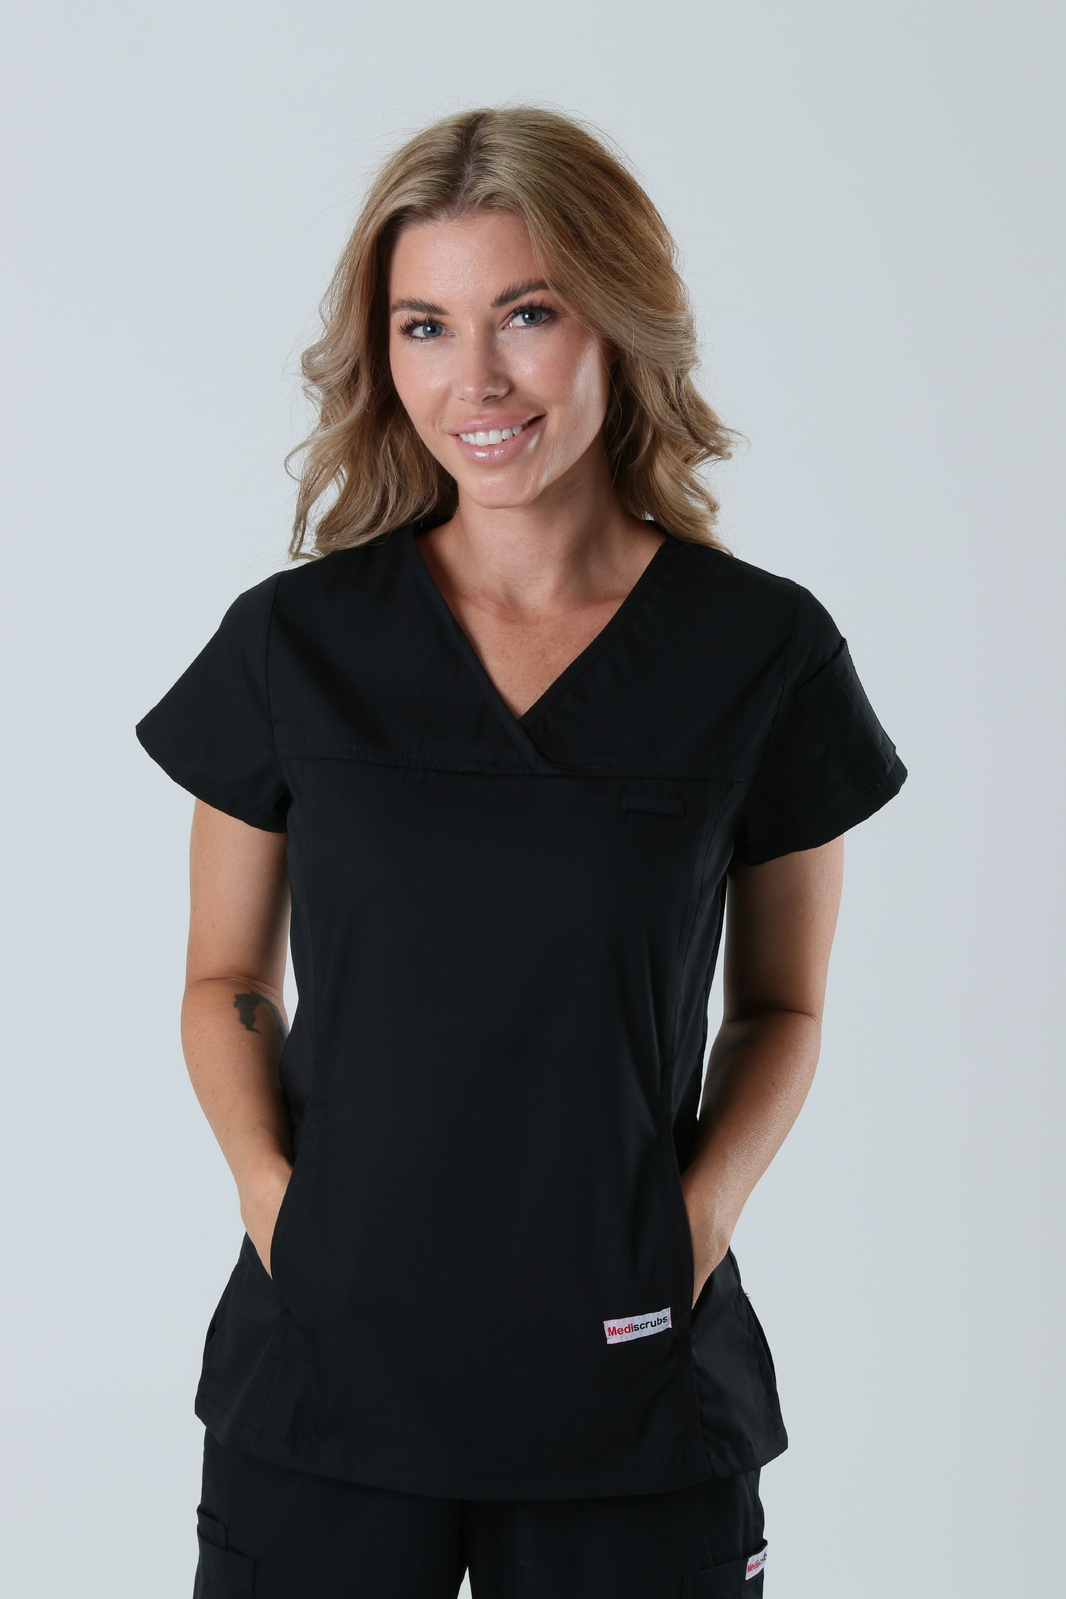 Queensland Children's Hospital Emergency Department Enrolled Nurse Uniform Top Bundle  (Women's Fit Top in Black incl Logos)